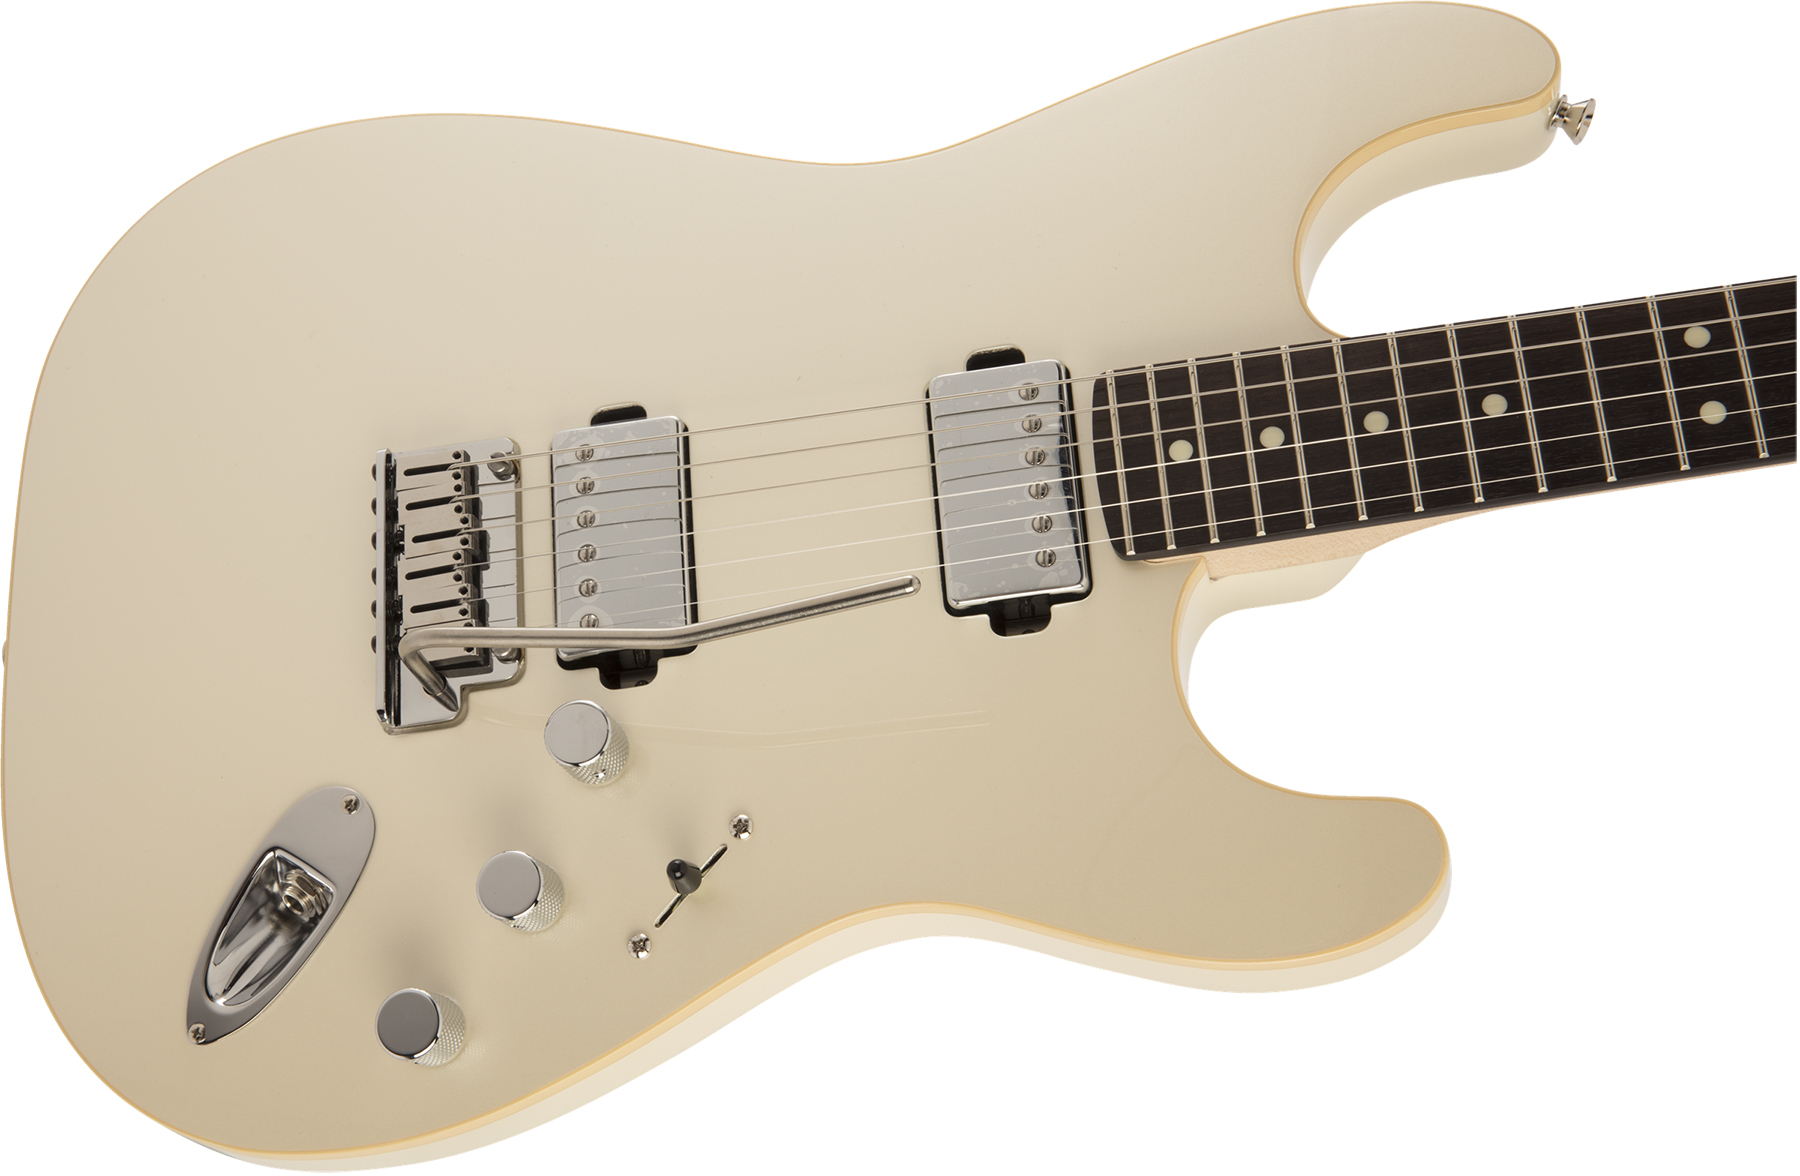 Fender Strat Modern Hh Japon Trem Rw - Olympic Pearl - Str shape electric guitar - Variation 2